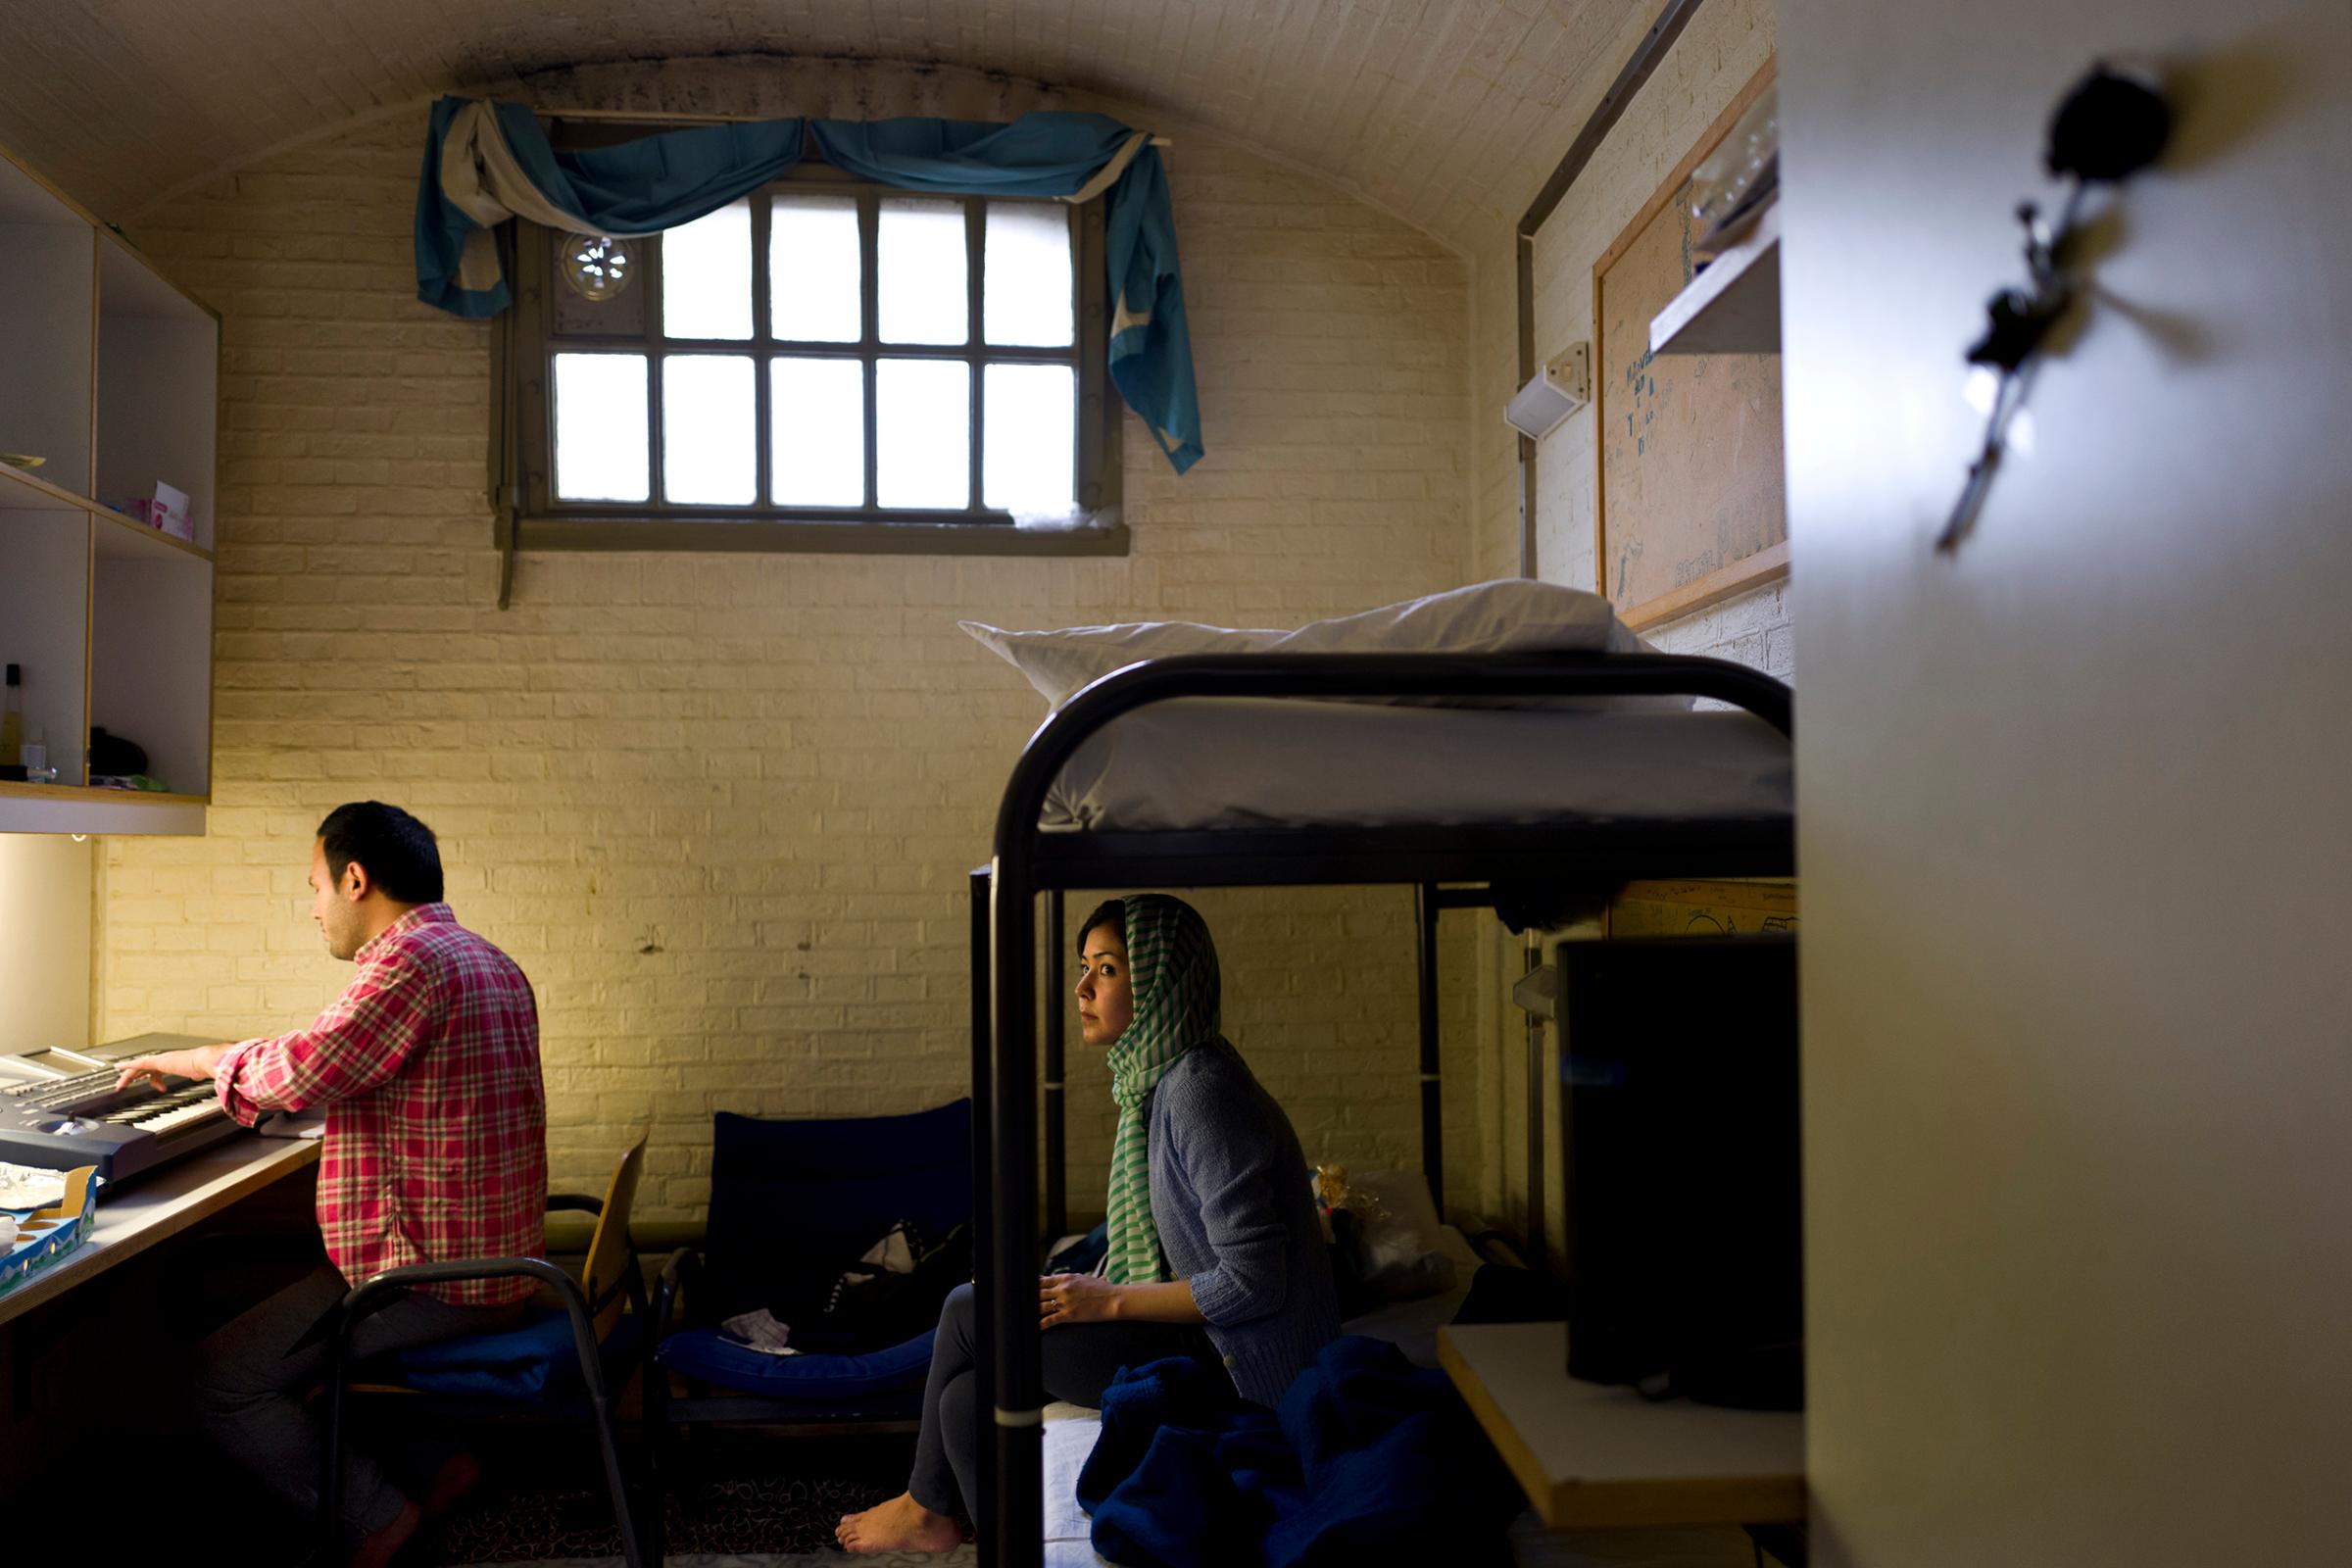 Afghan refugee Hamed Karmi, 27, plays keyboard next to his wife Farishta Morahami, 25, sitting on a bed inside their room at the former prison of De Koepel in Haarlem, Netherlands, April 6, 2016.